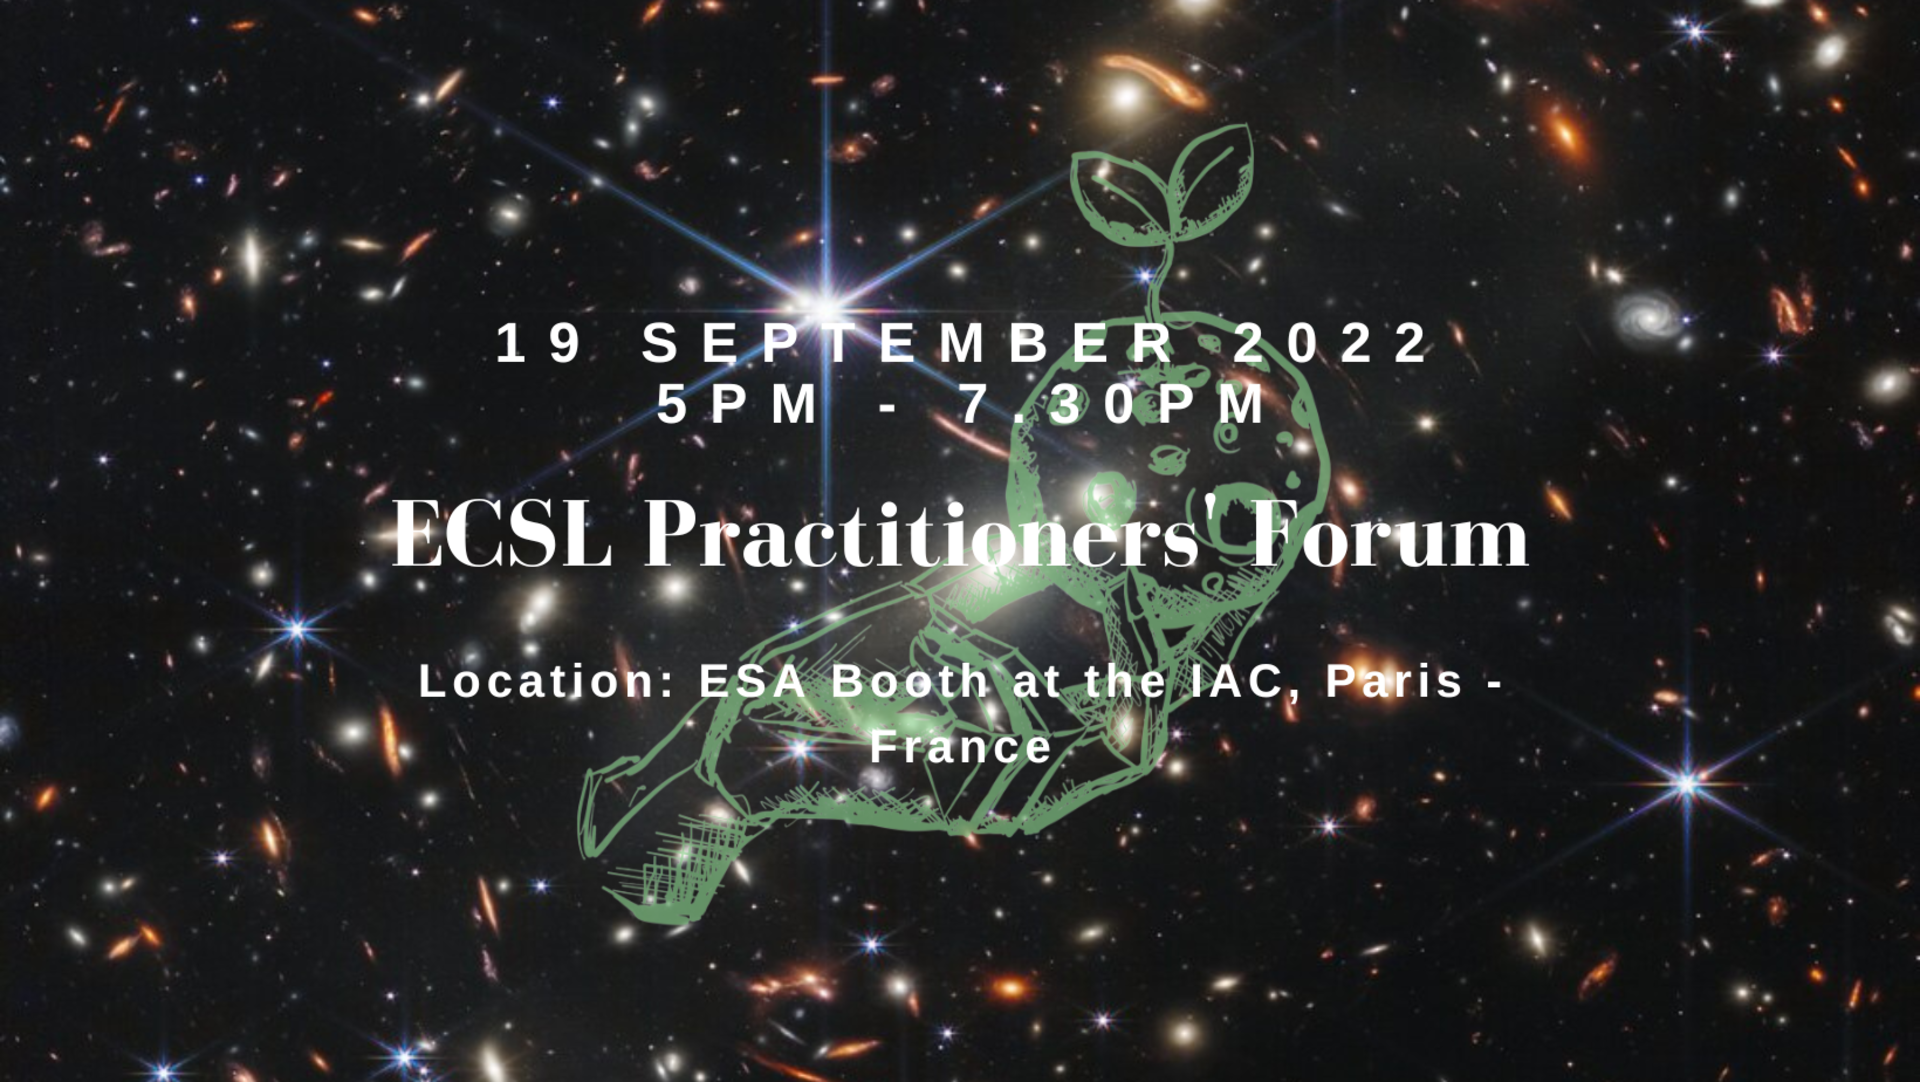 ECSL Practitioners' Forum 2022